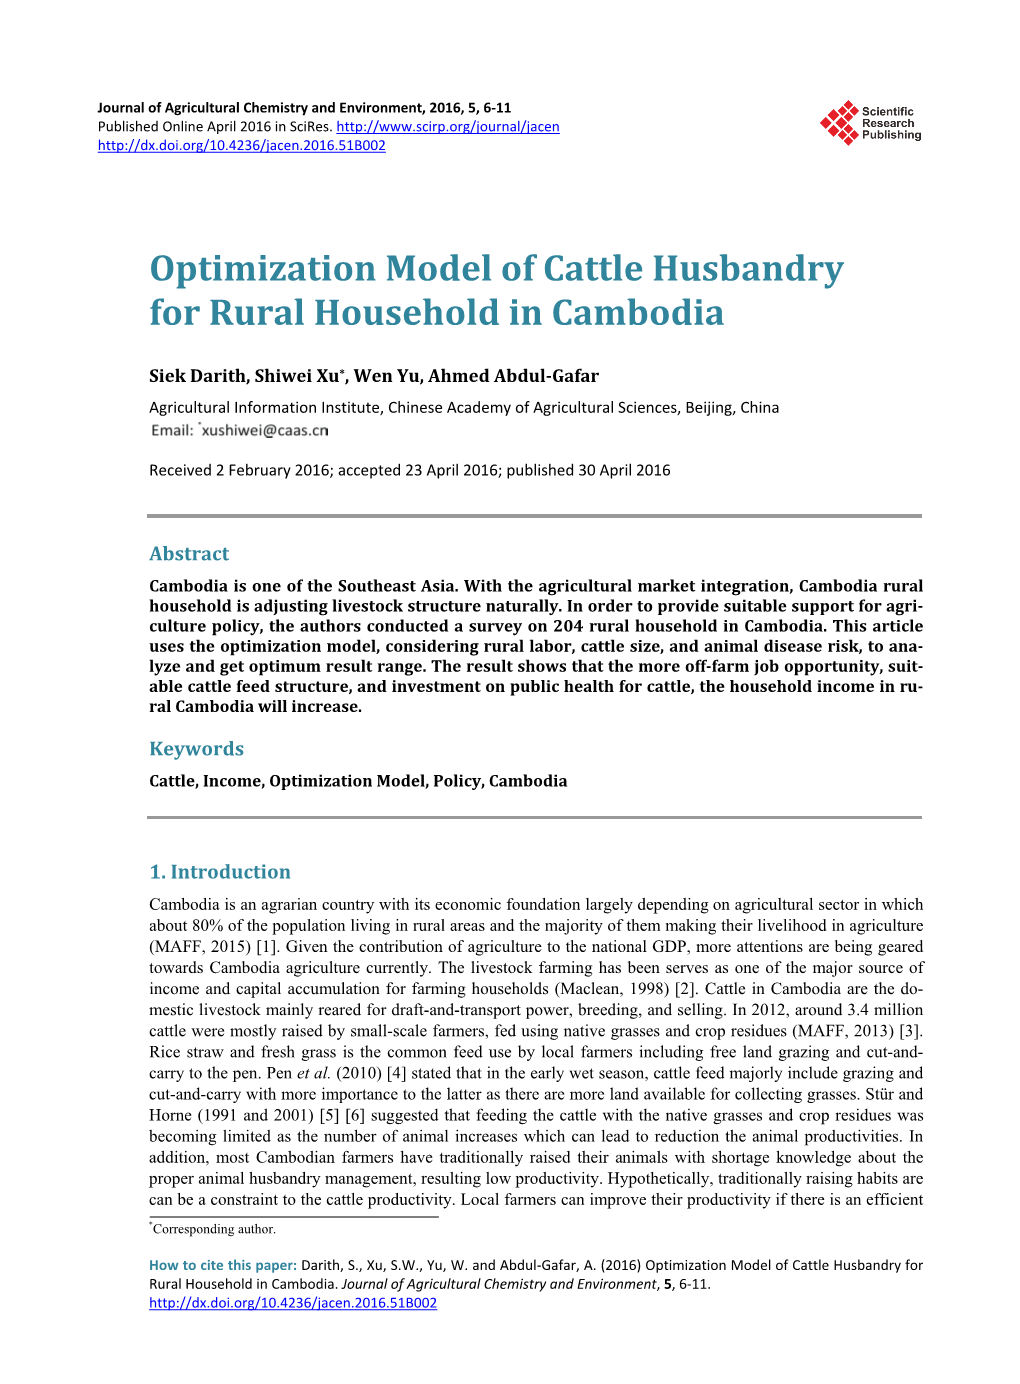 Optimization Model of Cattle Husbandry for Rural Household in Cambodia